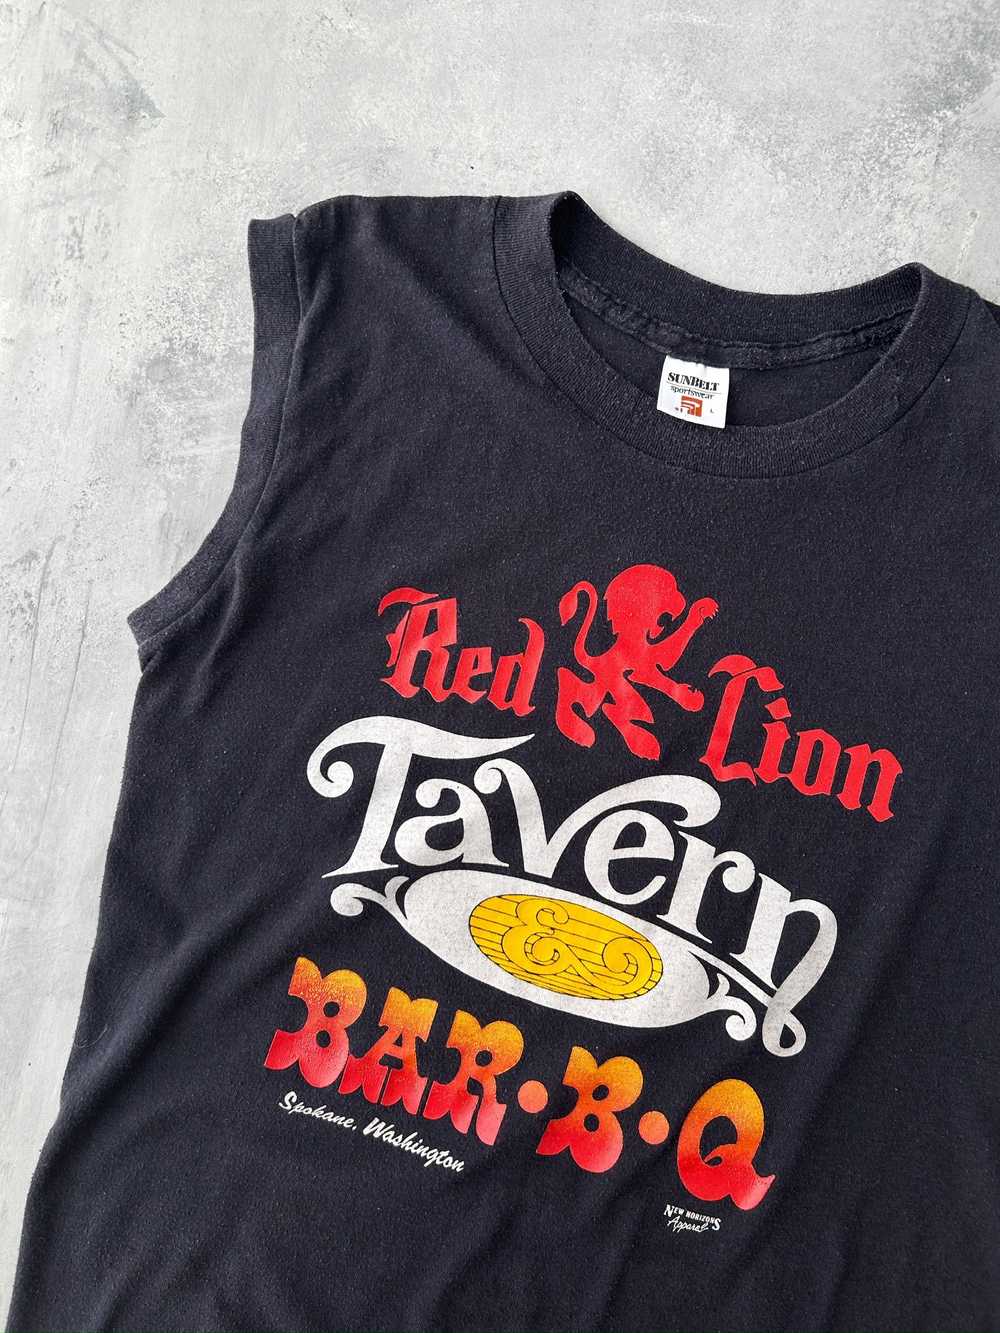 Red Lion Tavern Tank Top 80's - Medium - image 2